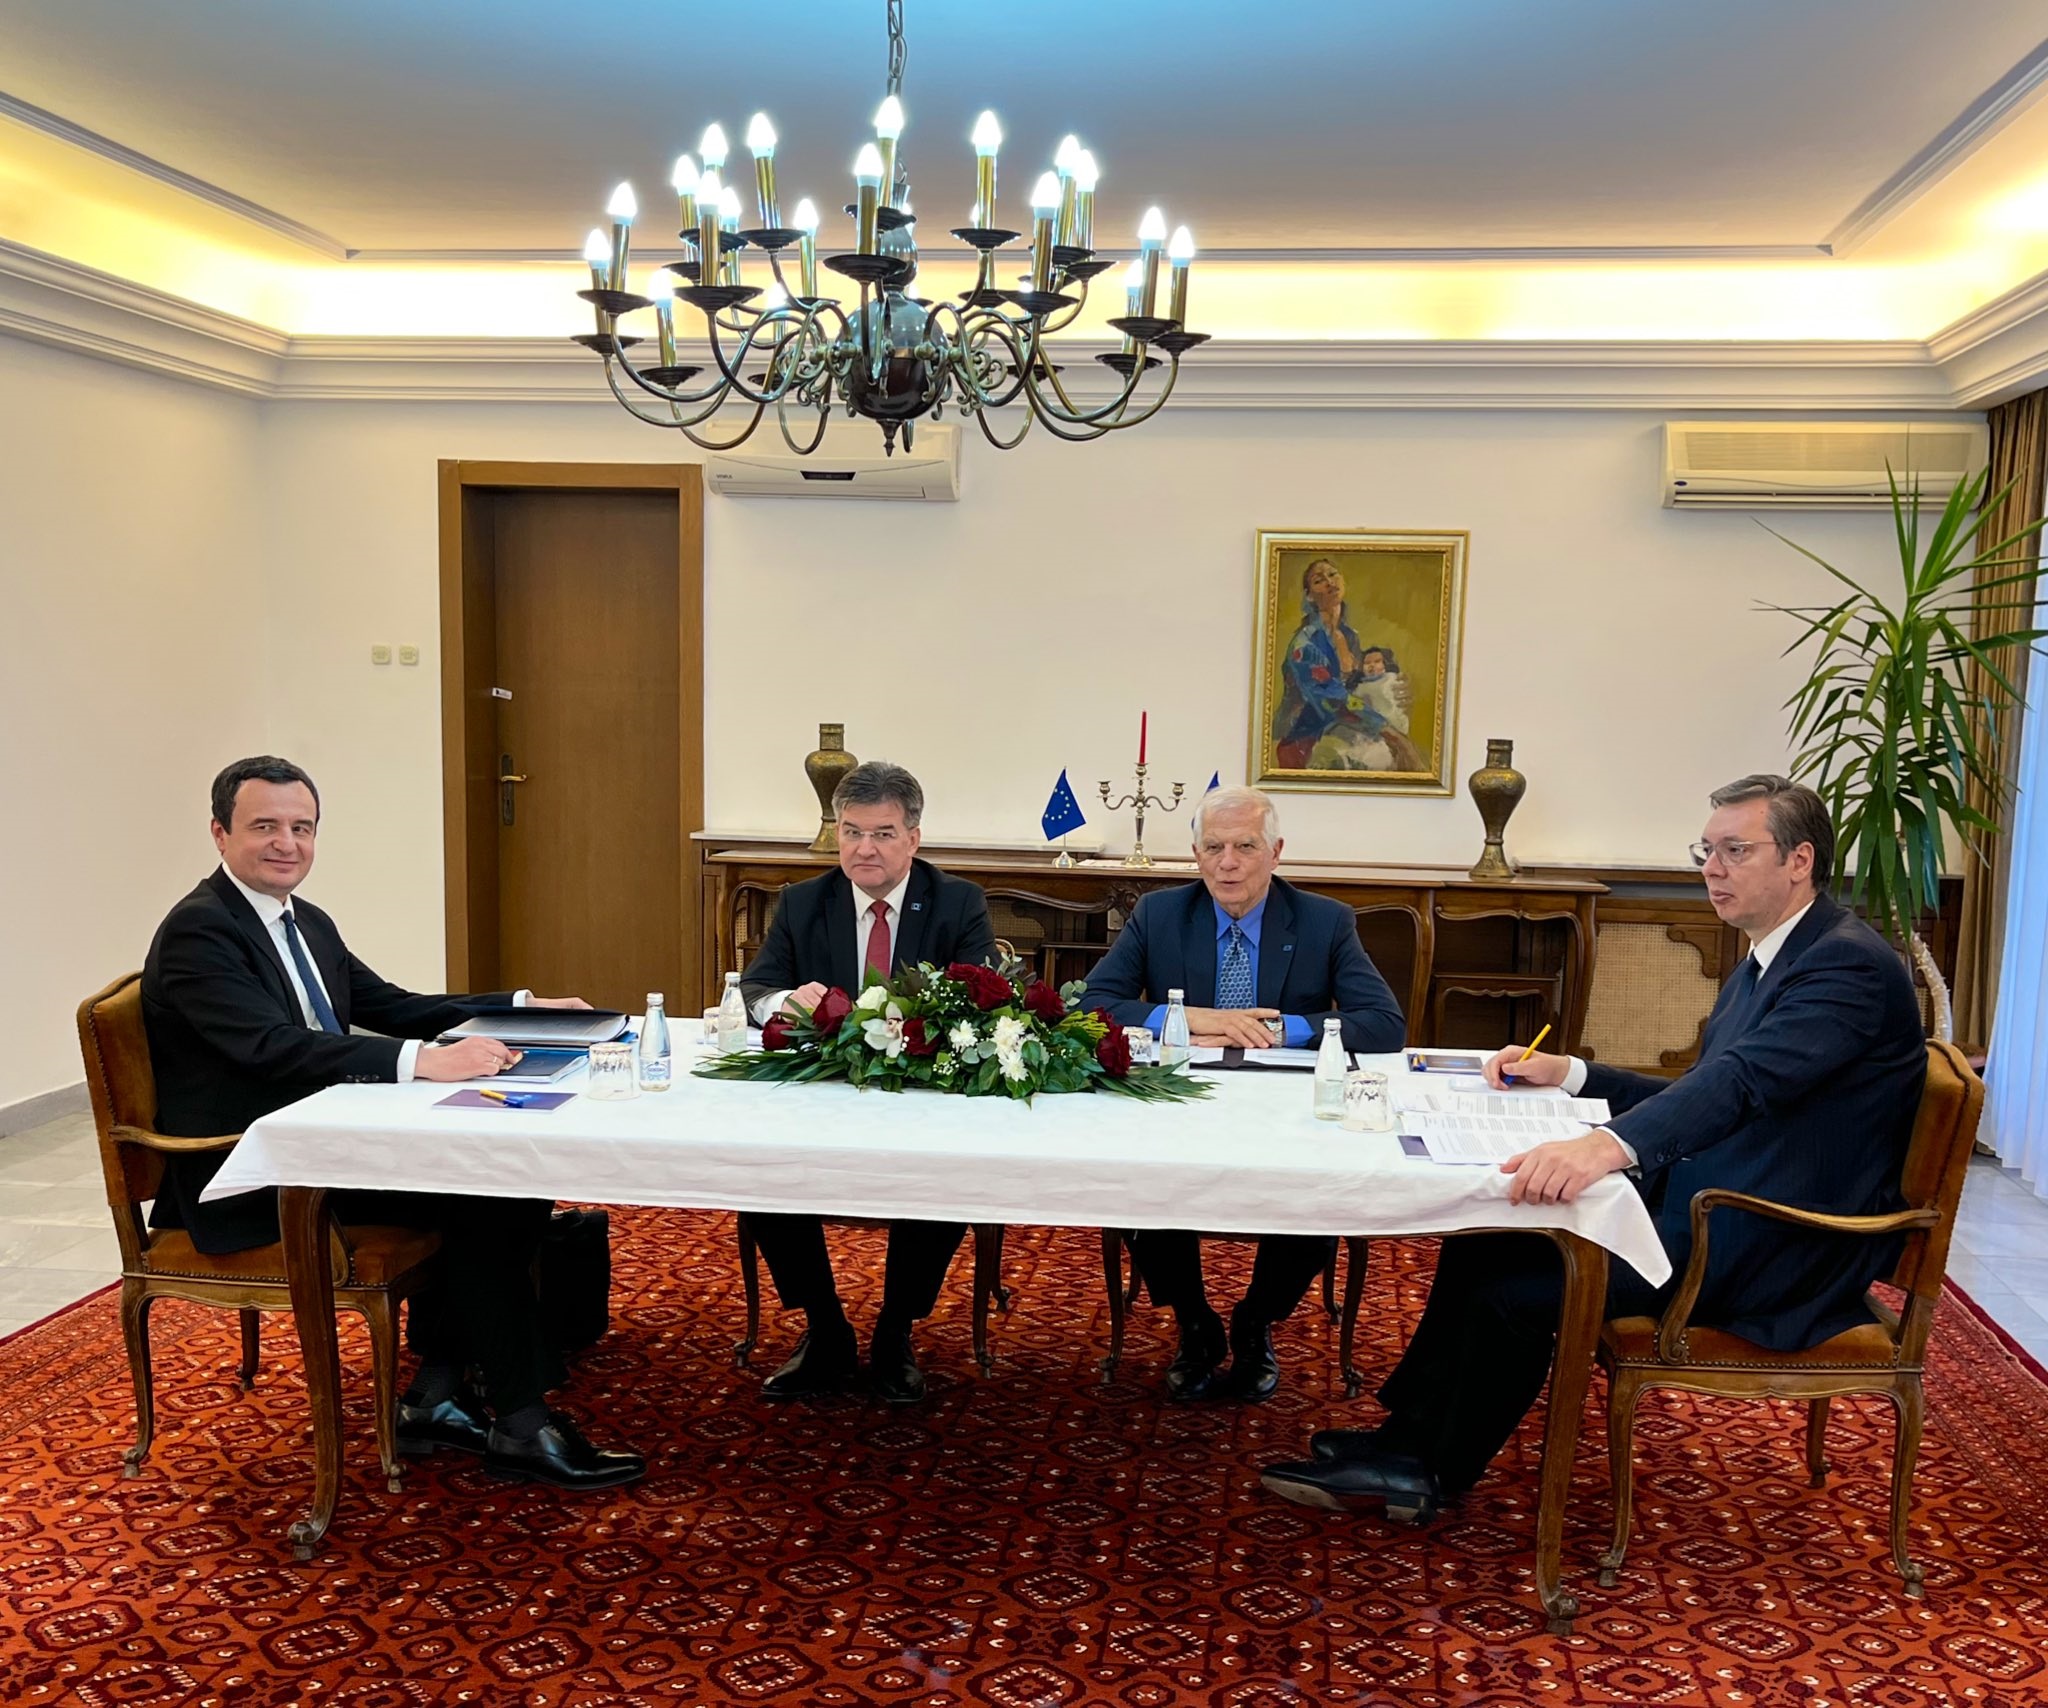 EU-facilitated Dialogue between Kosovo and Serbia